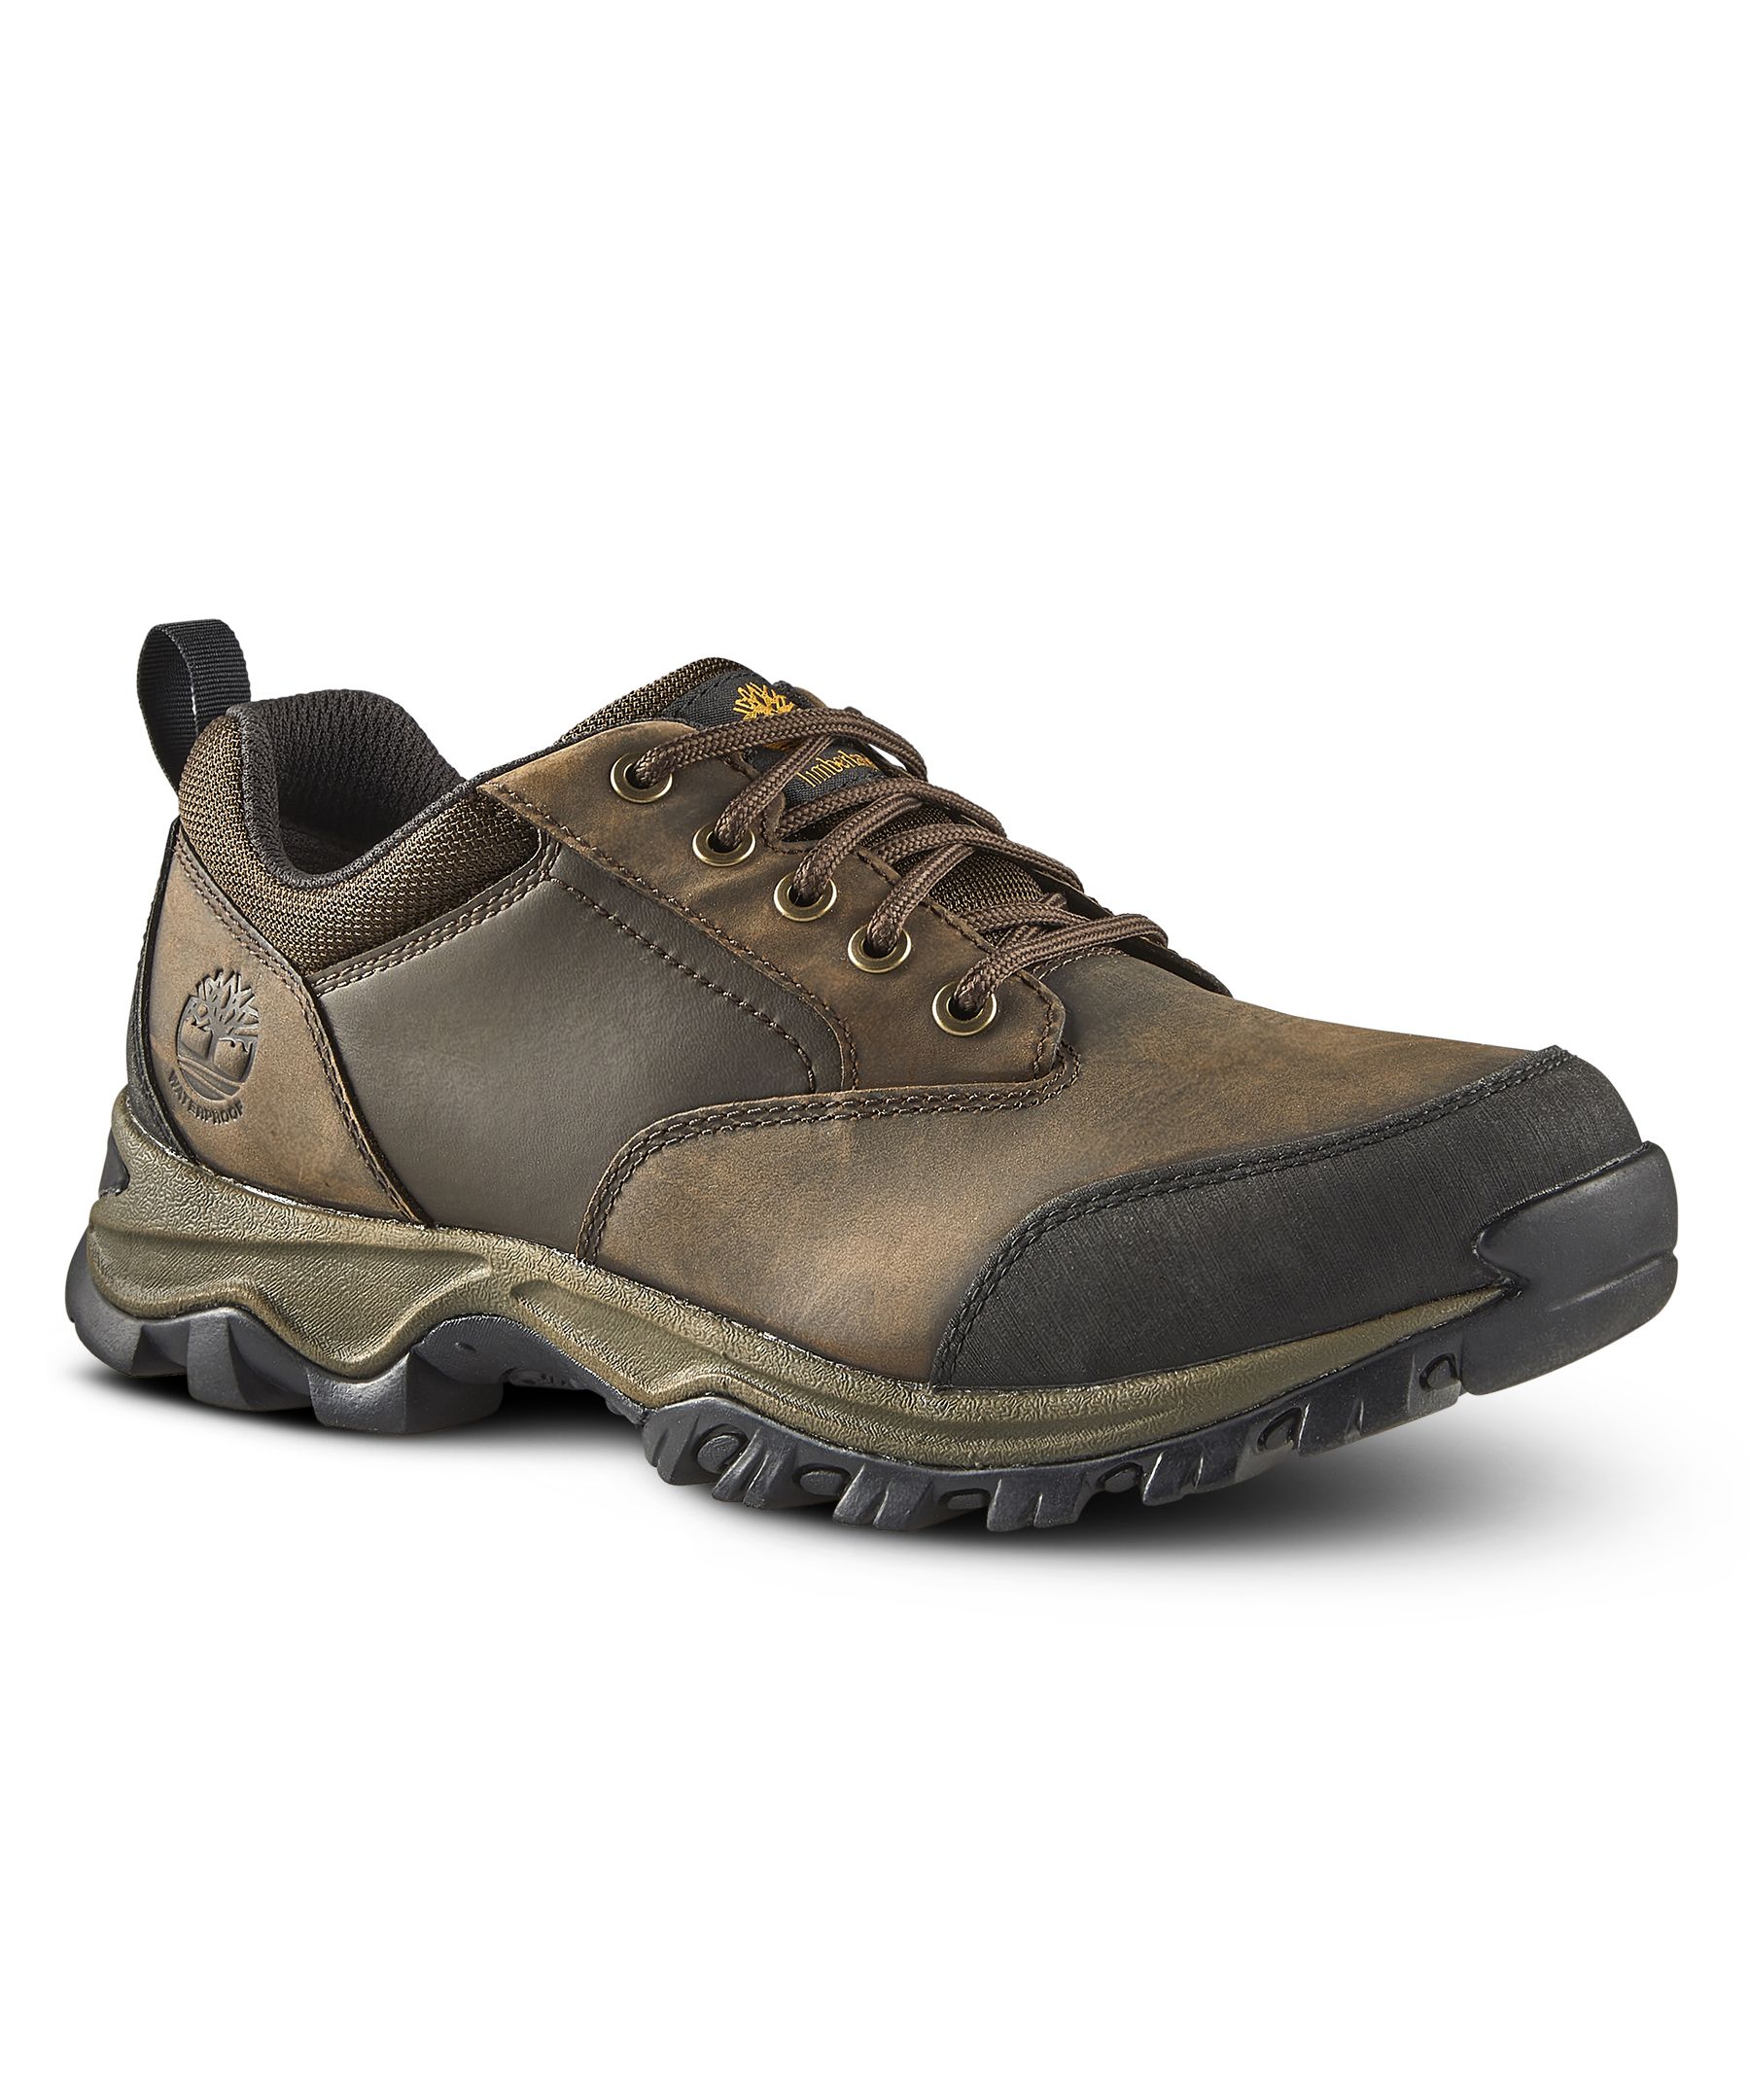 Timberland Men's Mt. Maddsen Waterproof Hiking Shoes - Brown | Marks